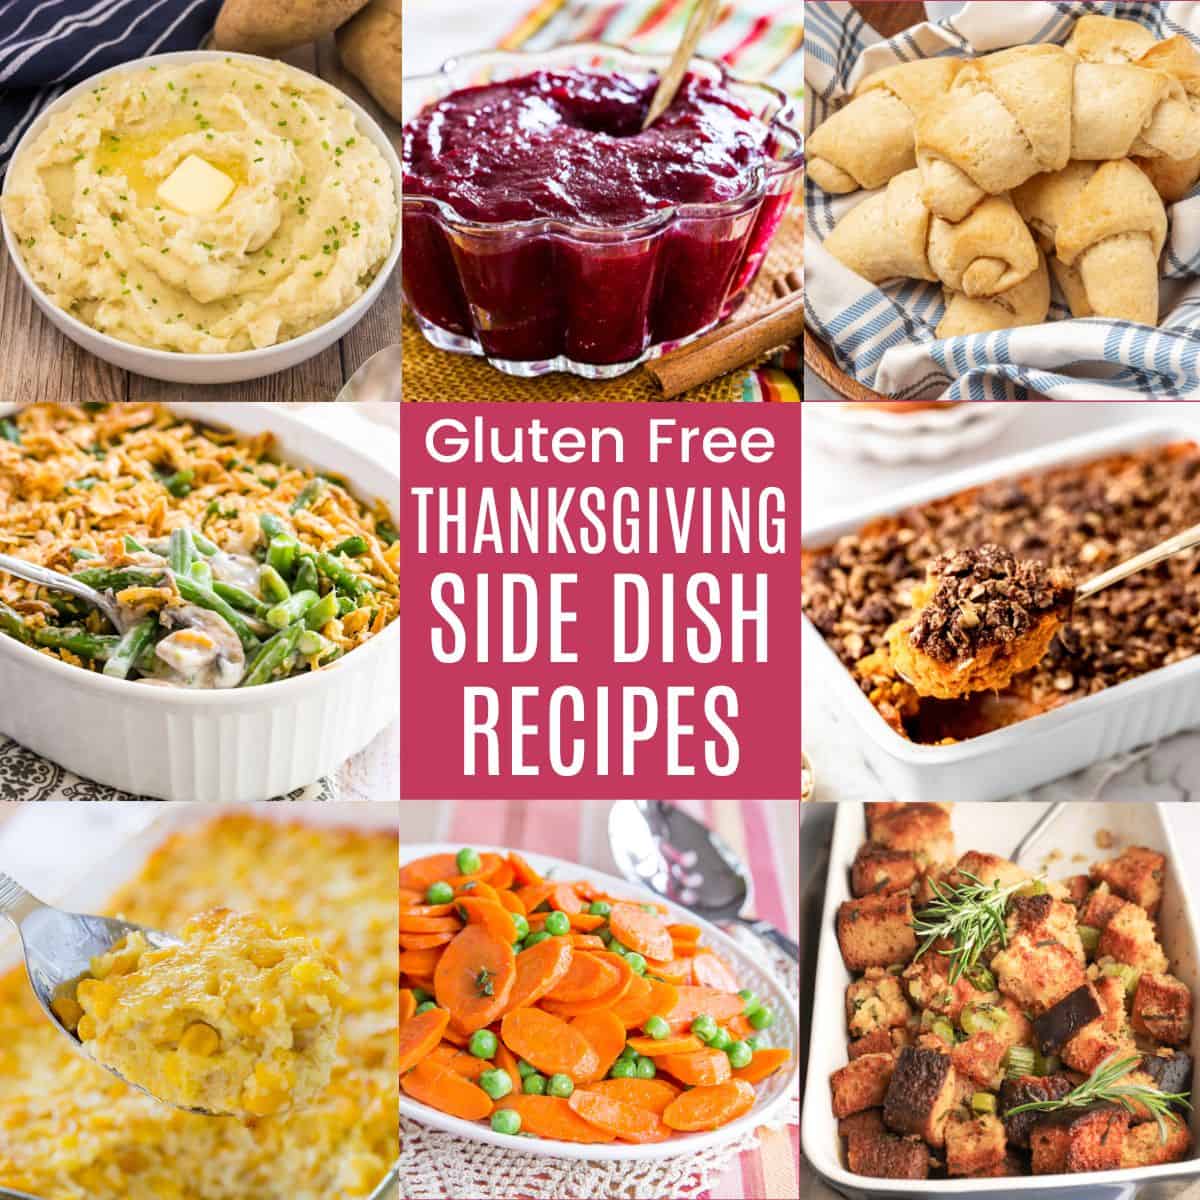 https://cupcakesandkalechips.com/wp-content/uploads/2021/11/Thanksgiving-Side-Dish-Recipes.jpeg